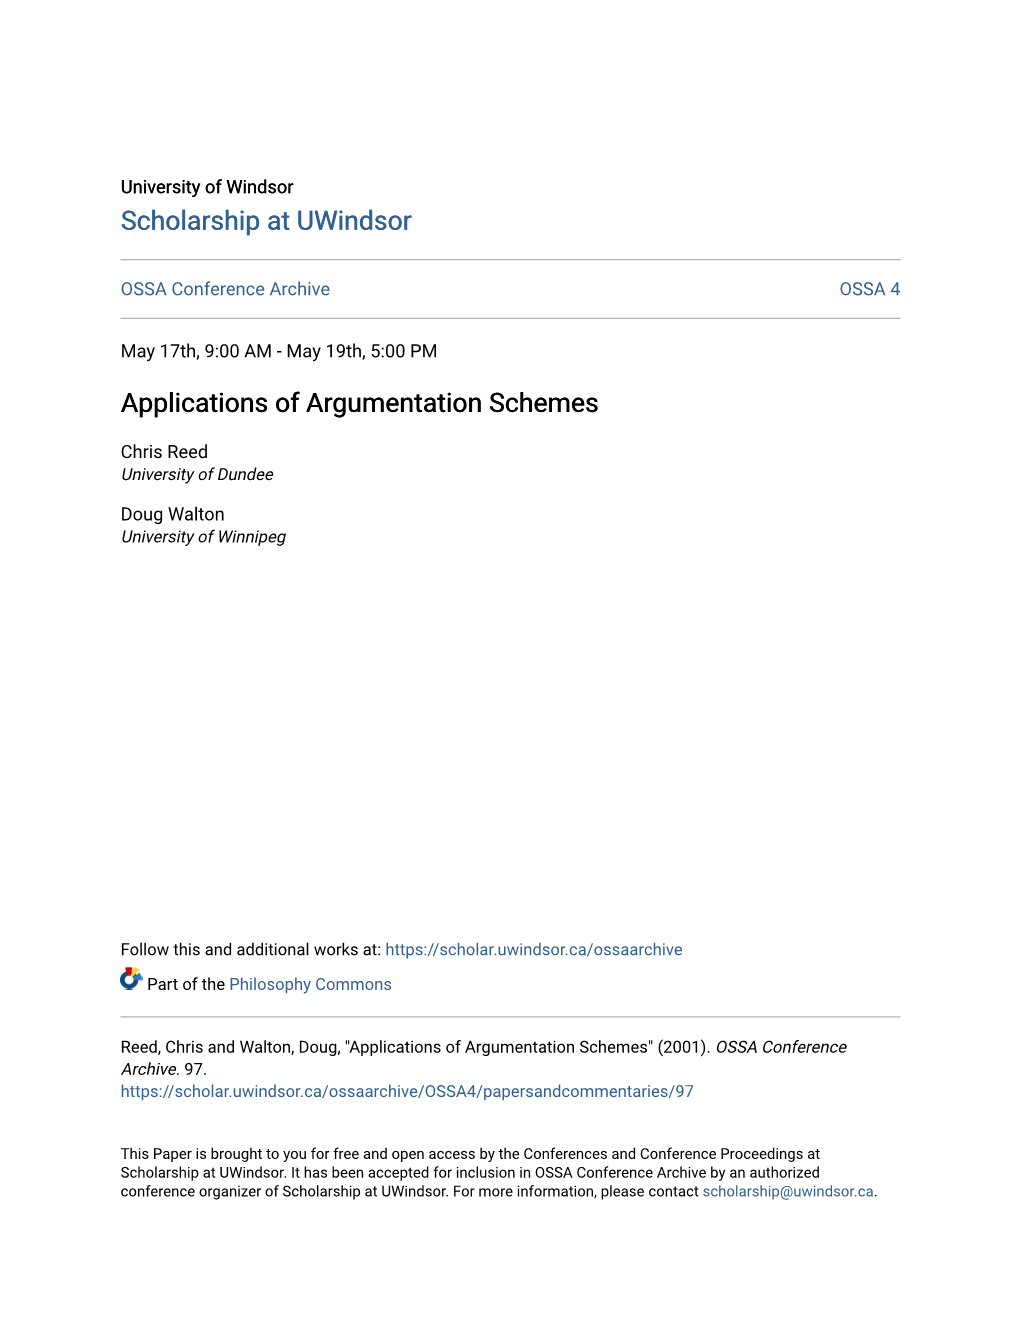 Applications of Argumentation Schemes